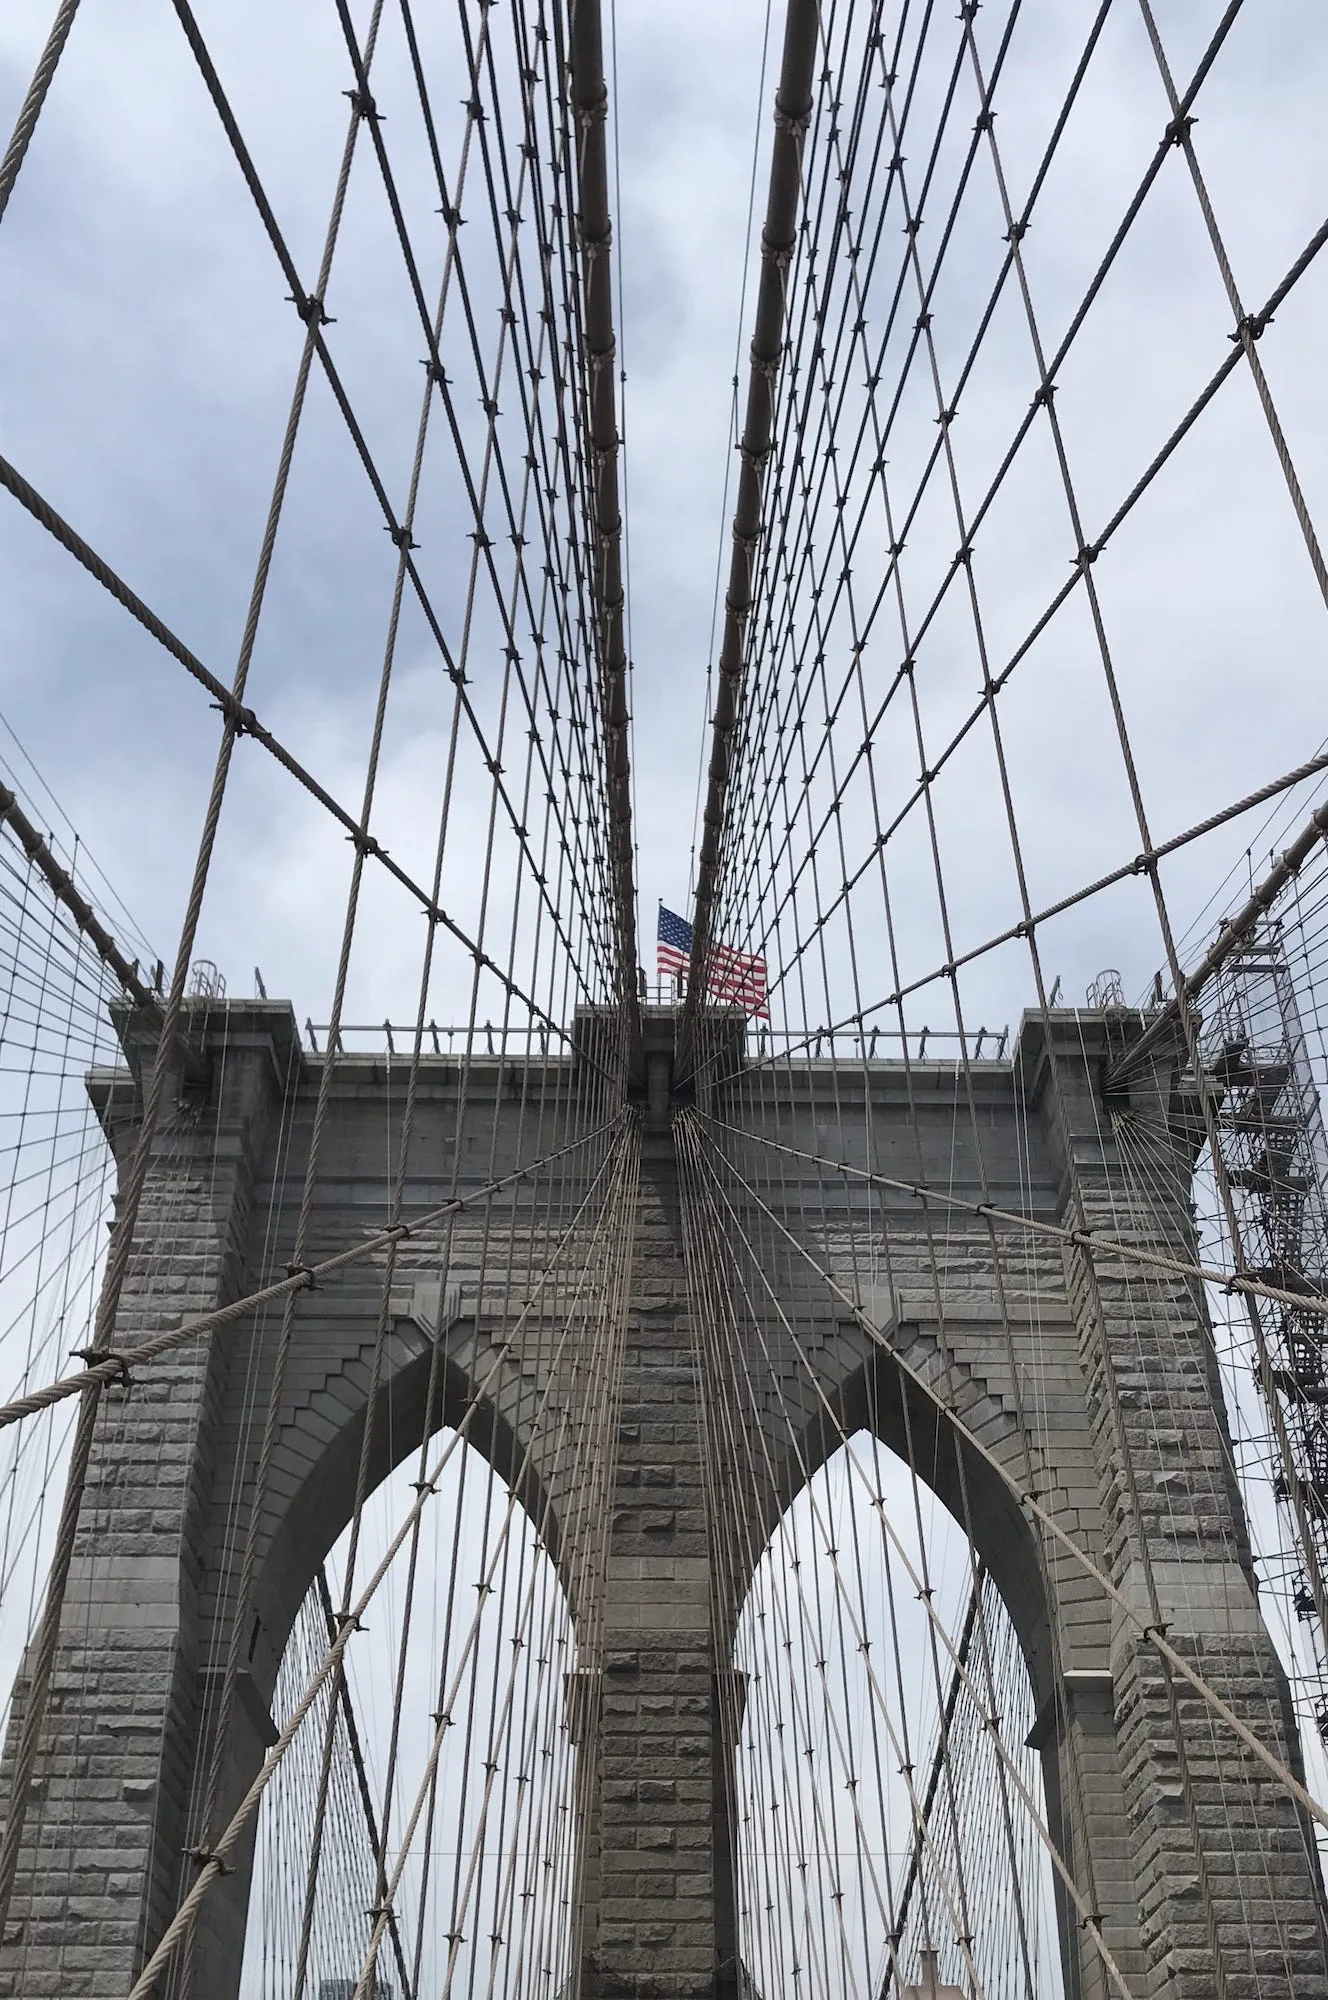 Flag waving in the wind, taken while walking over the Brooklyn bridge